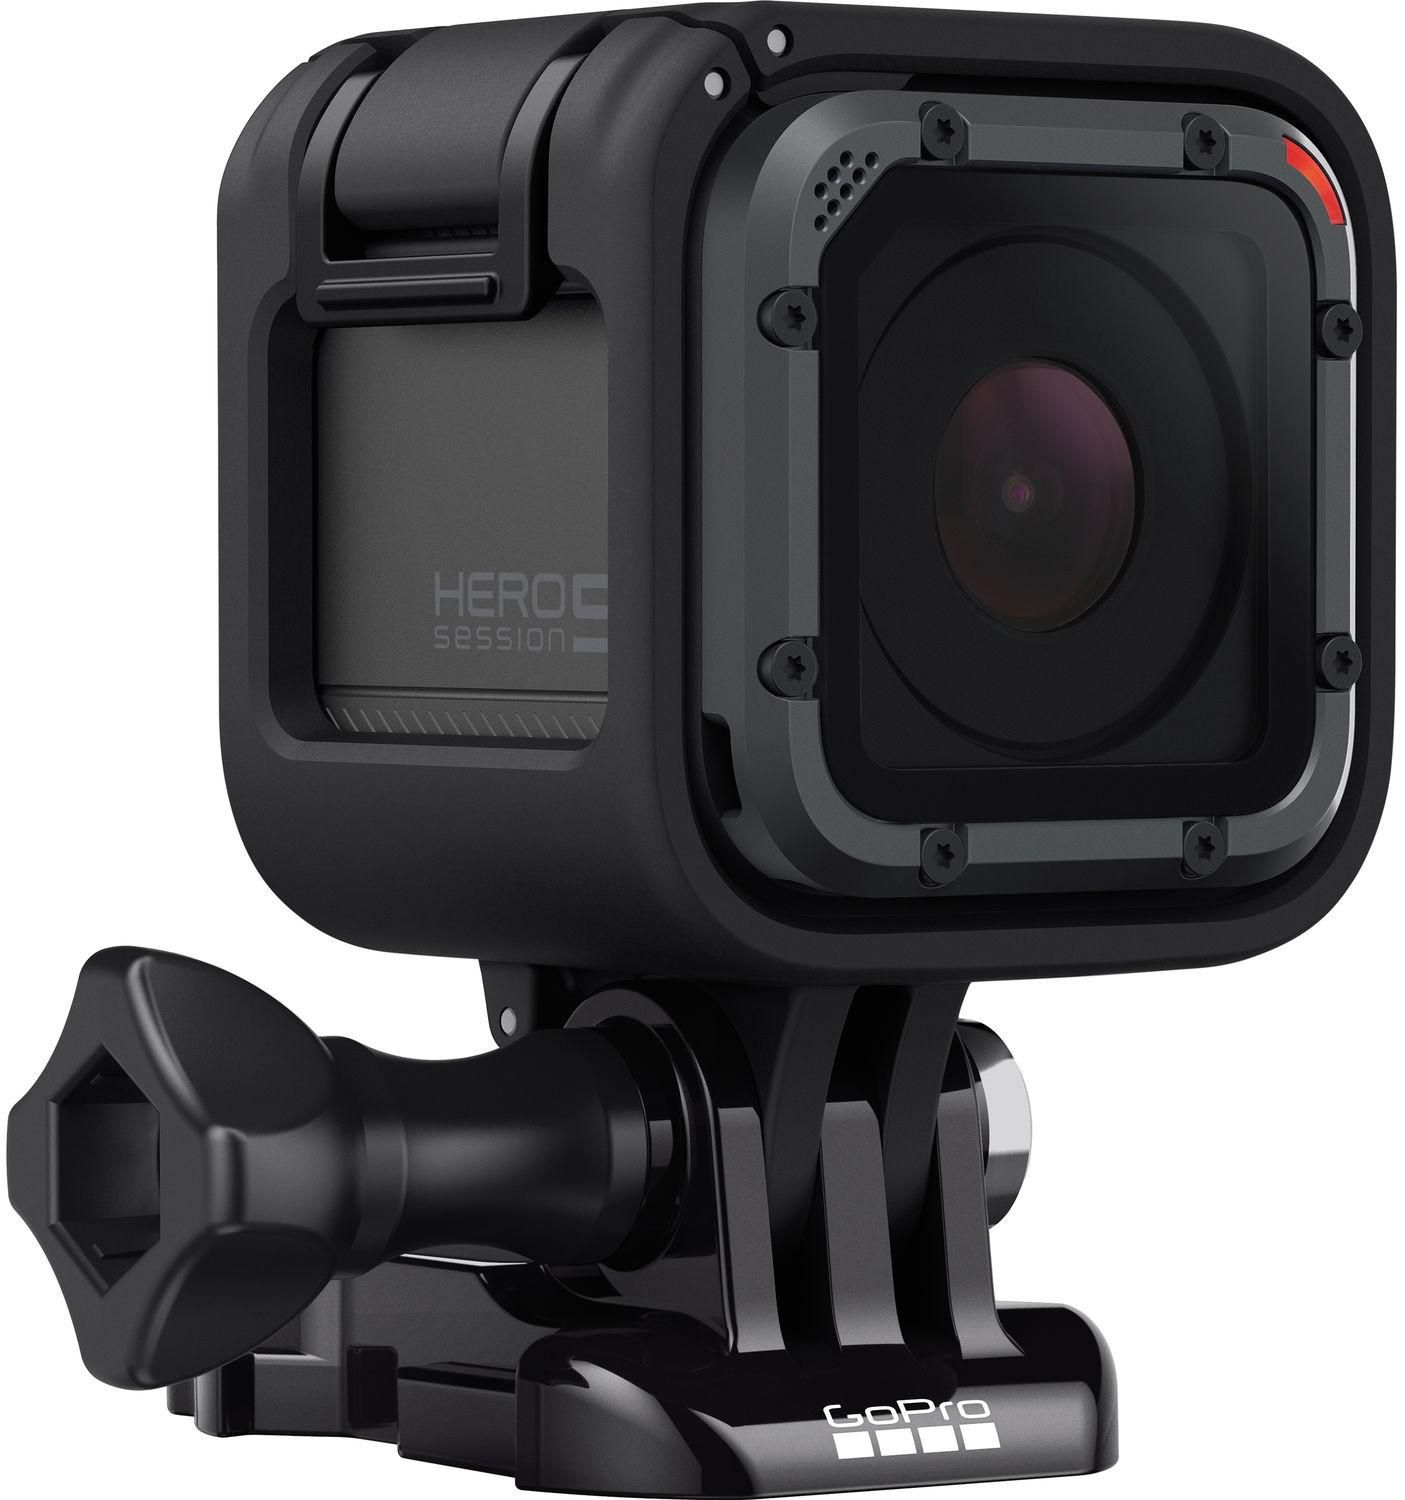 GoPro HERO5 Session 10MP Action Camera - 4K Video, Waterproof